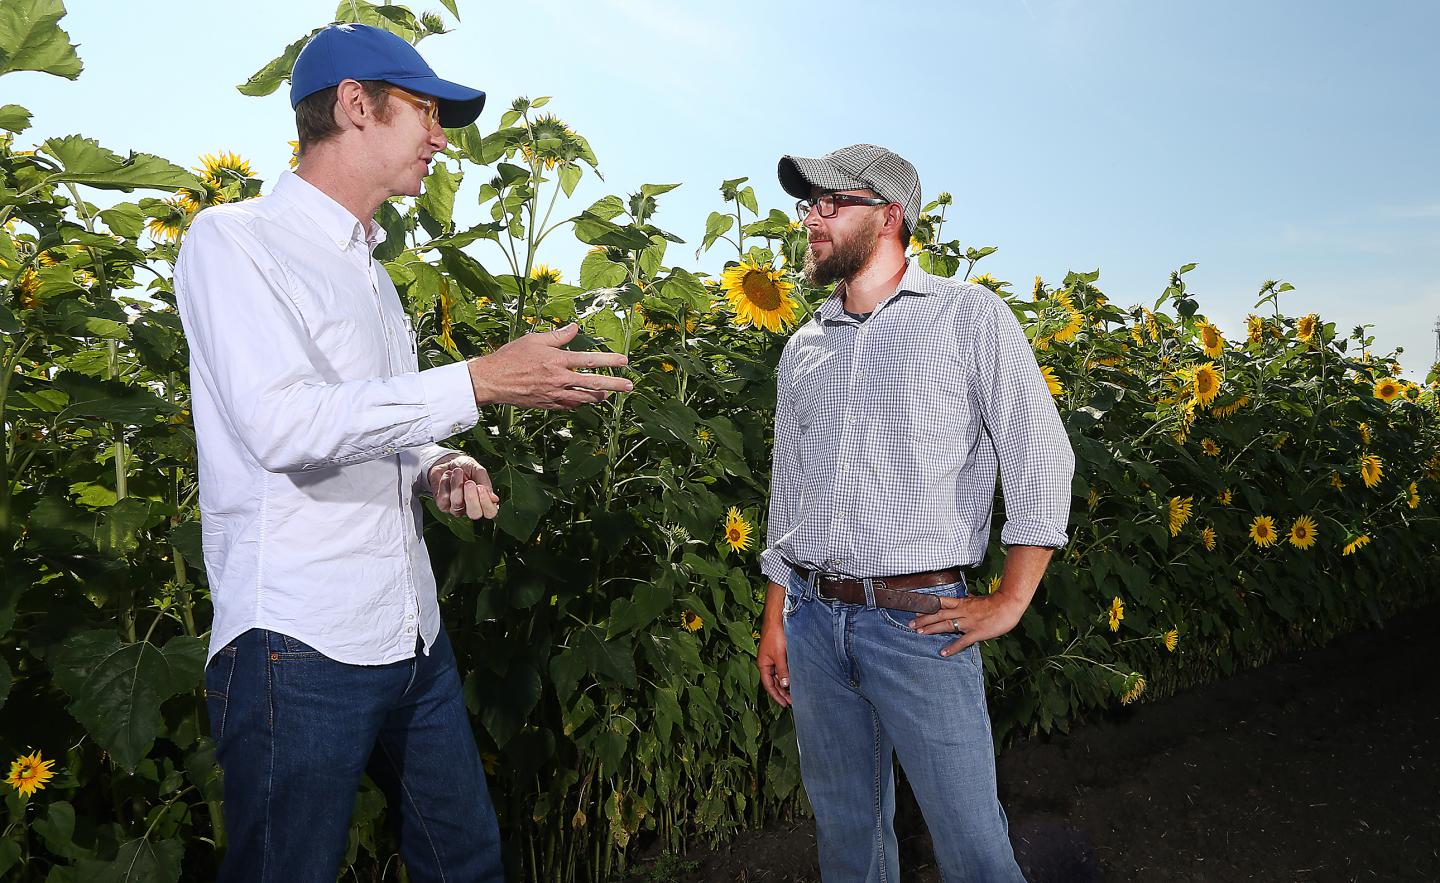 Students Find Mutation in Dwarfed Sunflowers